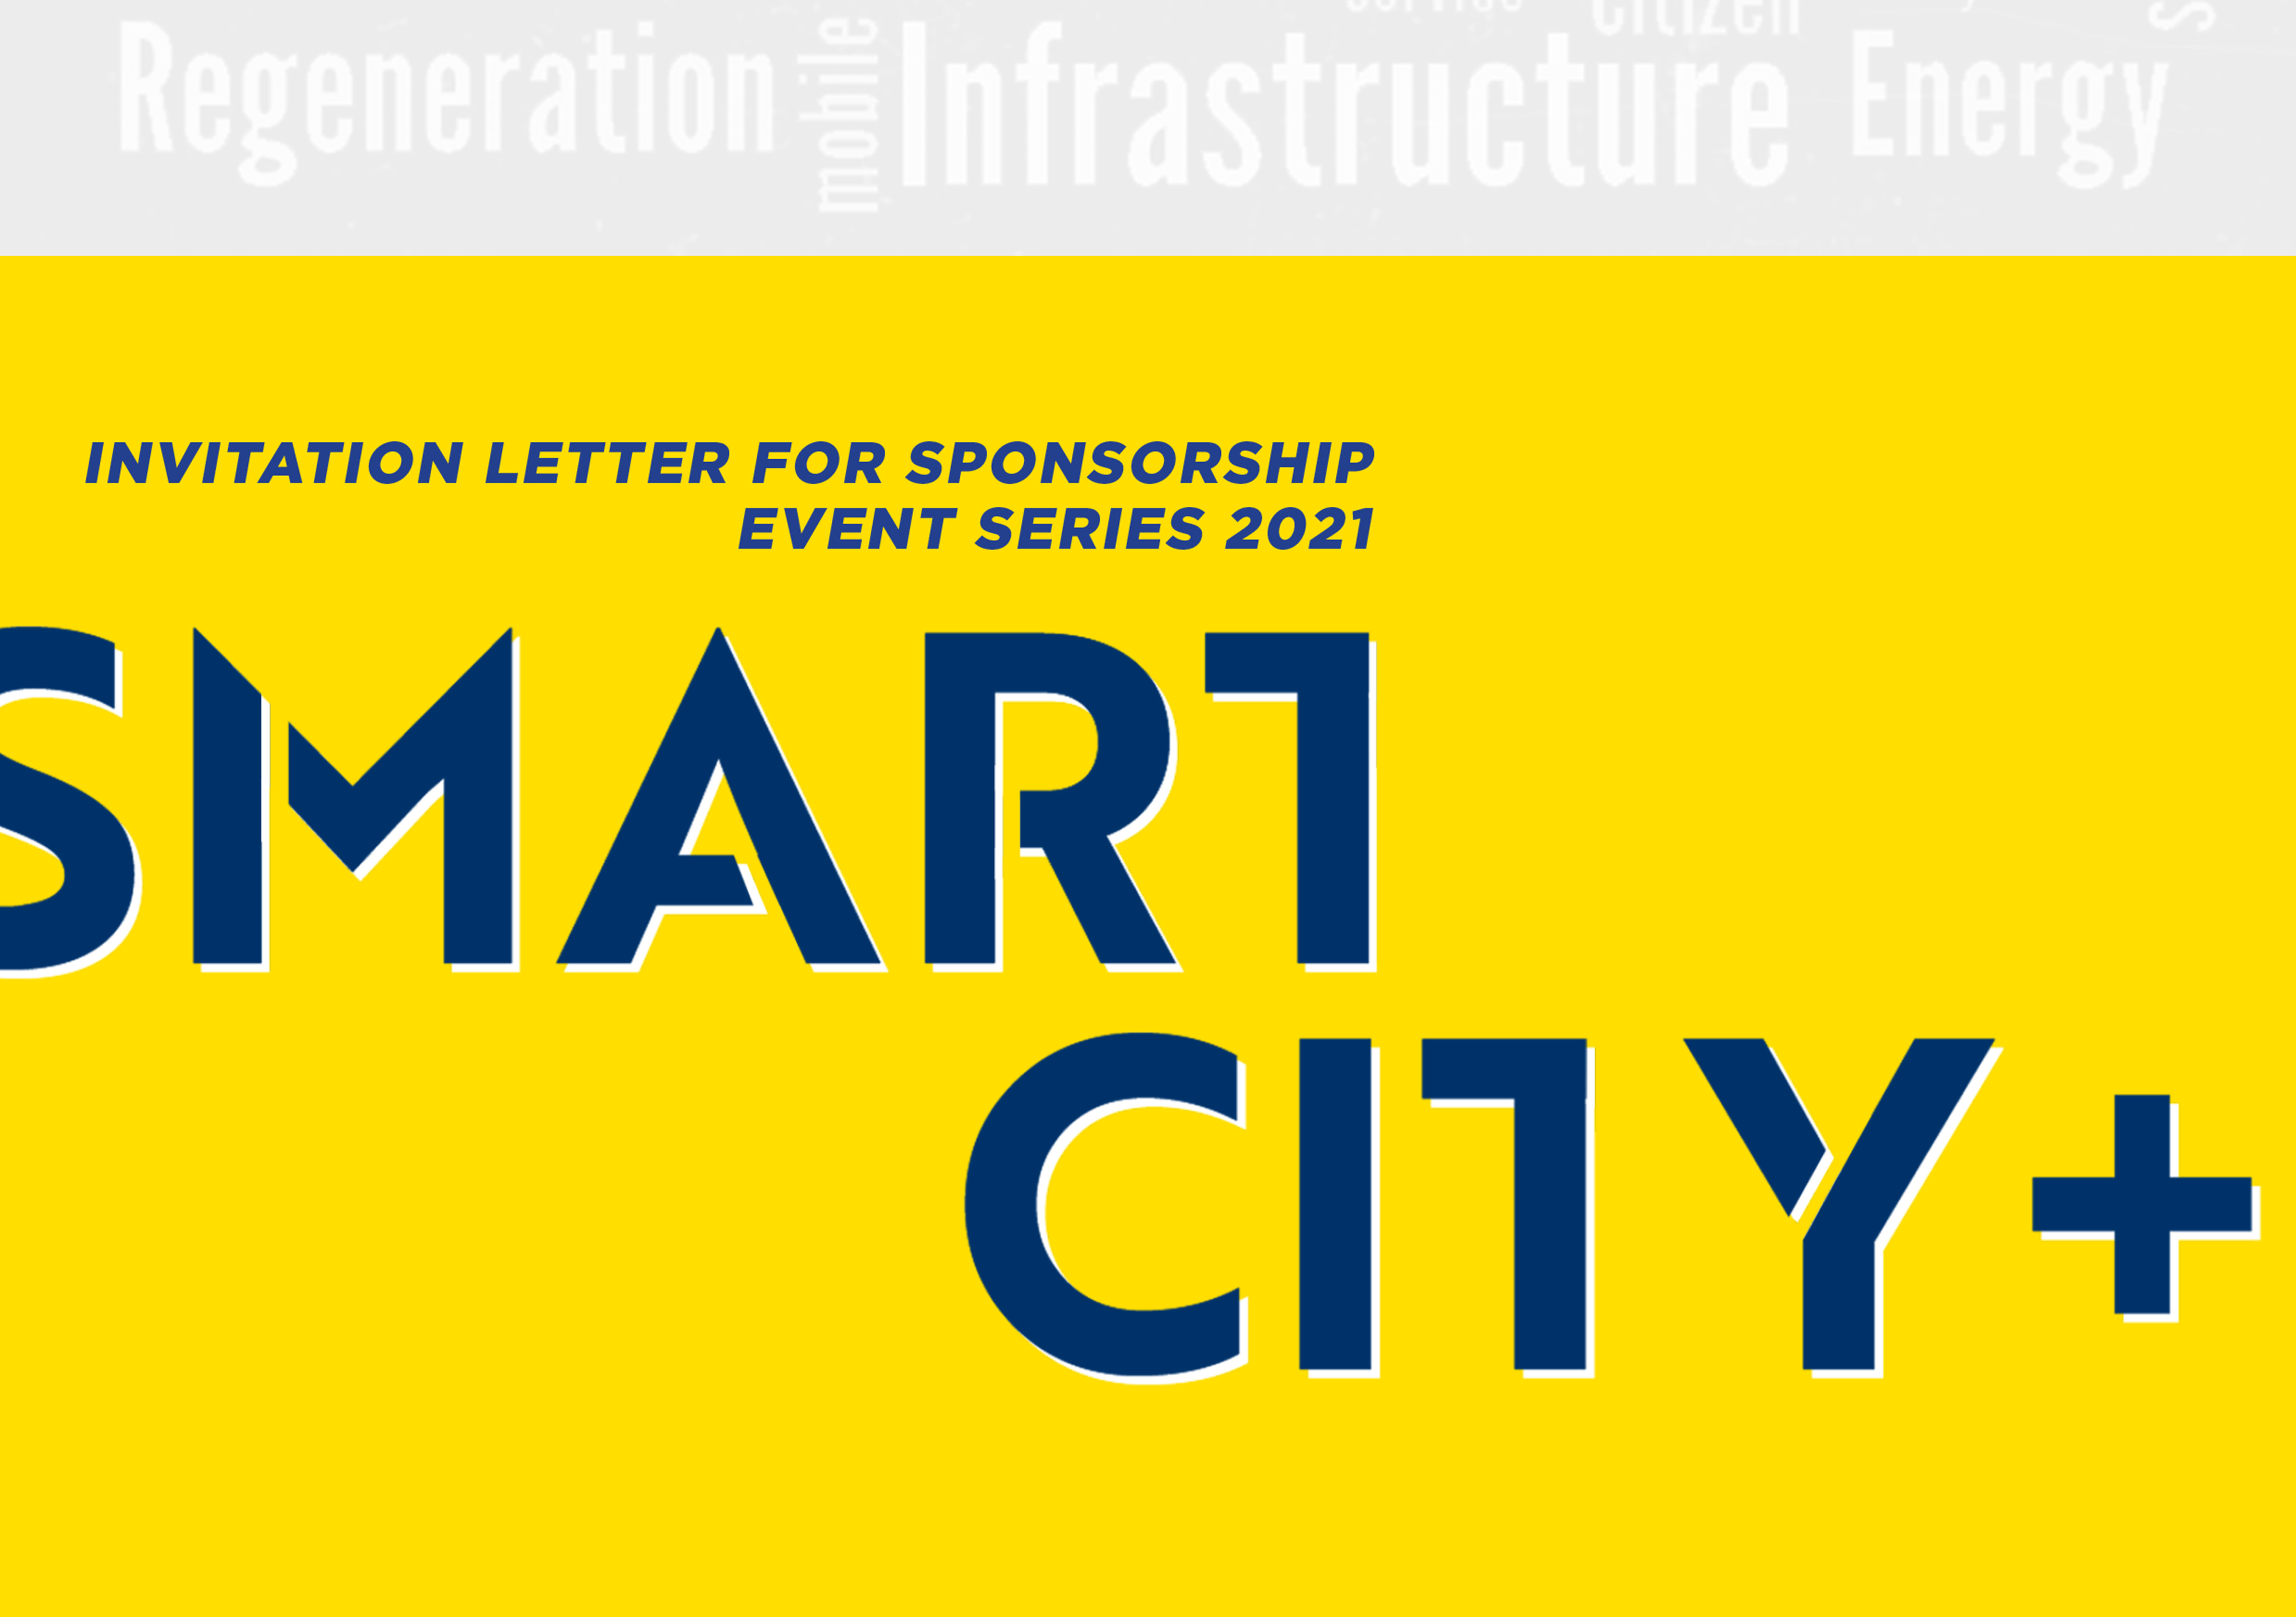 ISCM Event Series 2021 - Smart City +